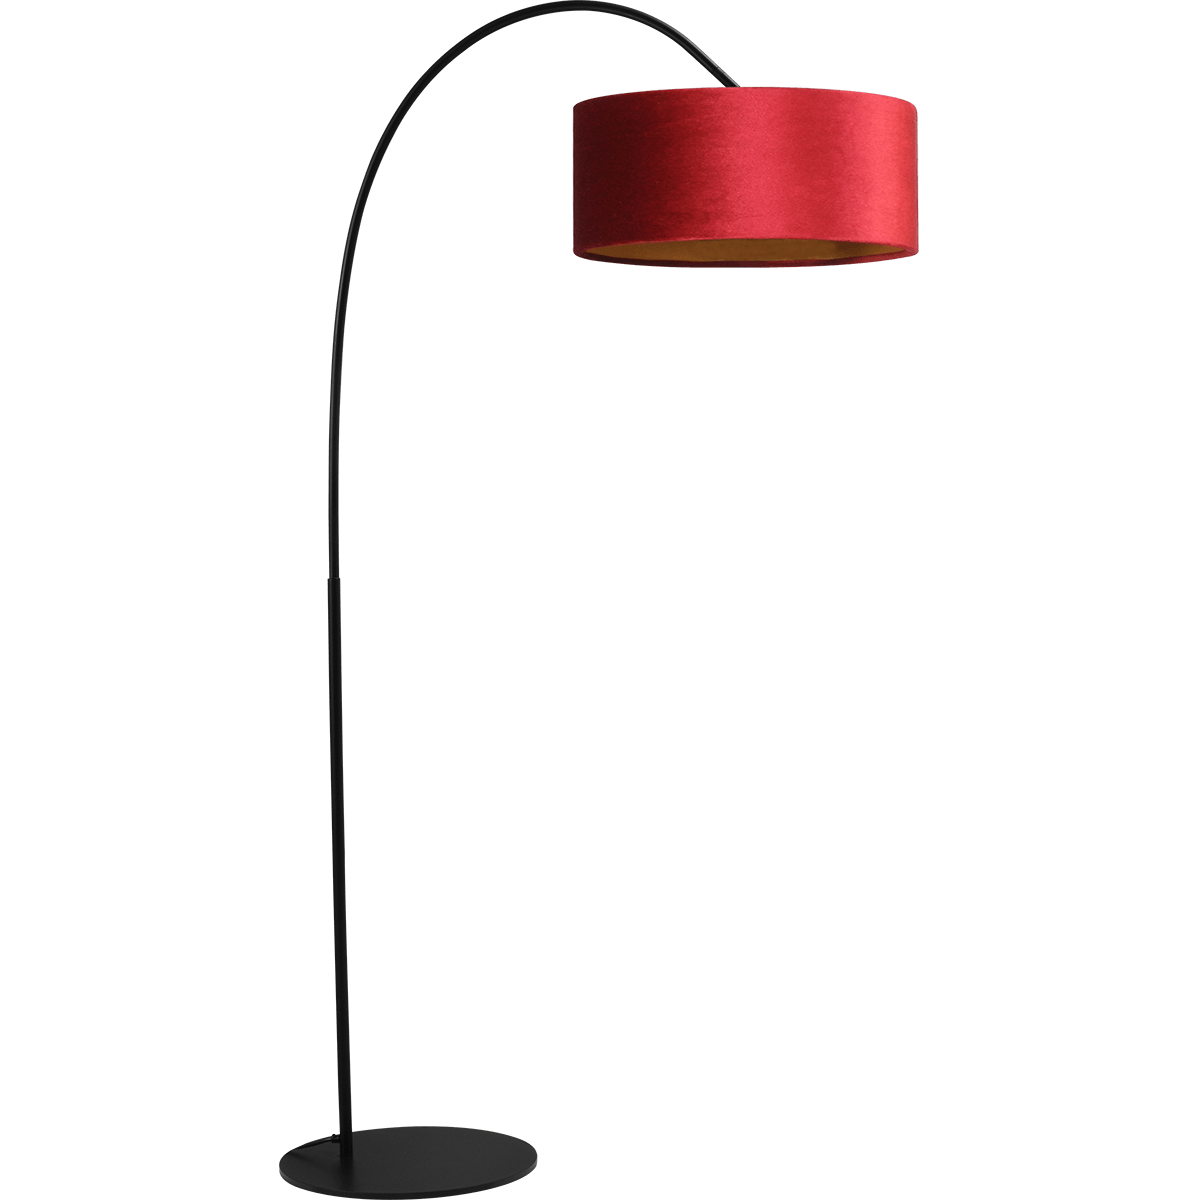 rekken Het formulier Danser Vloerlamp Arch black, mat zwart, hoogte 183 cm, breedte 88 cm inclusief rode  lampenkap, MASTERLIGHT - 1205-05-6580-03-52 - Webo Verlichting